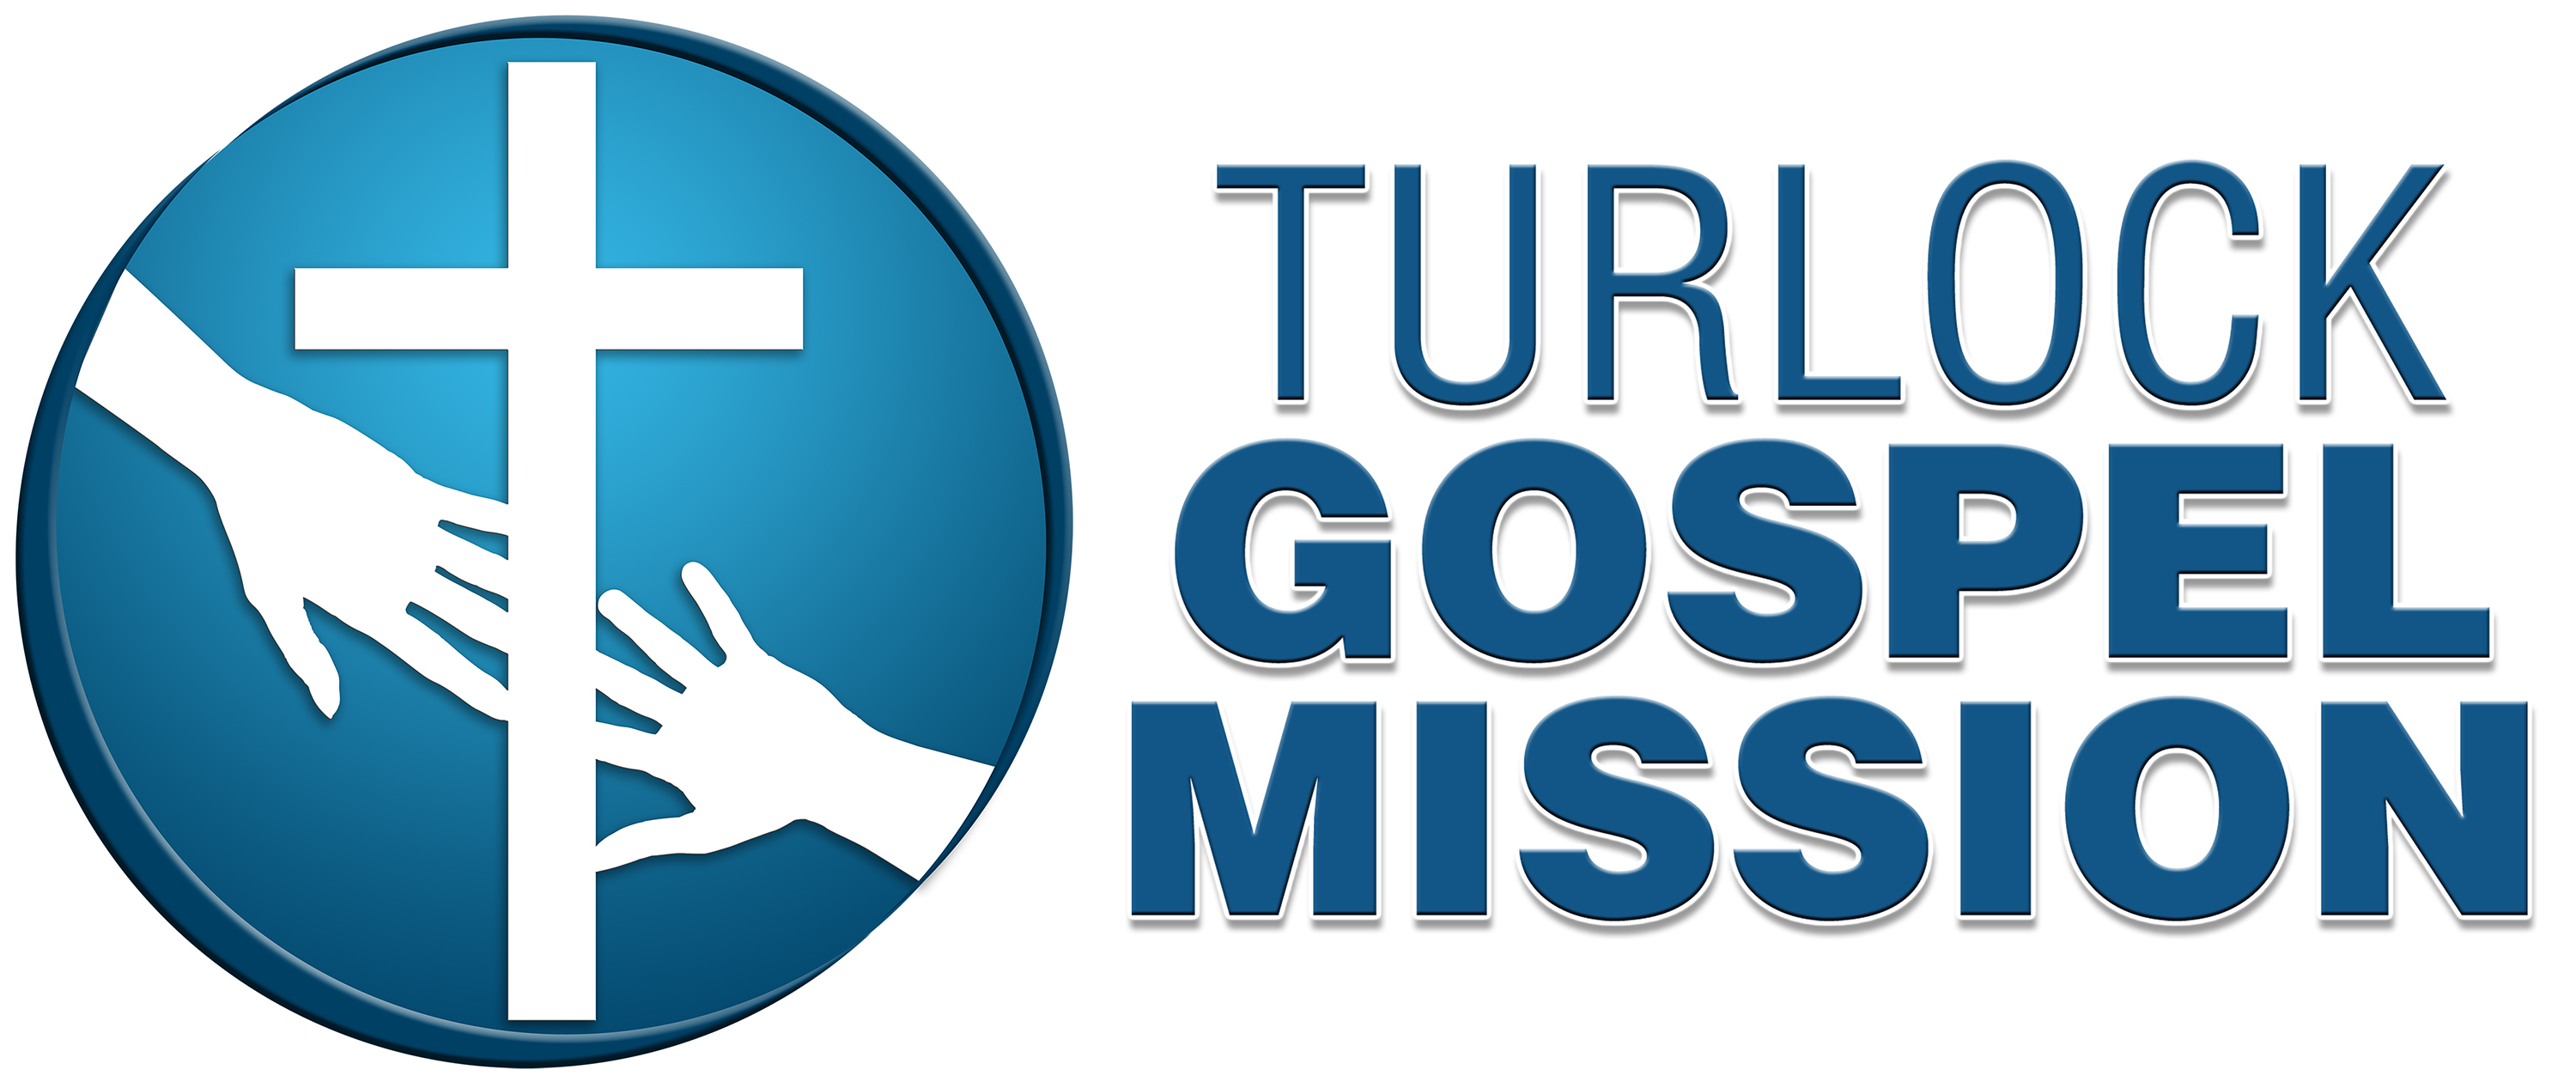 Turlock Gospel Mission